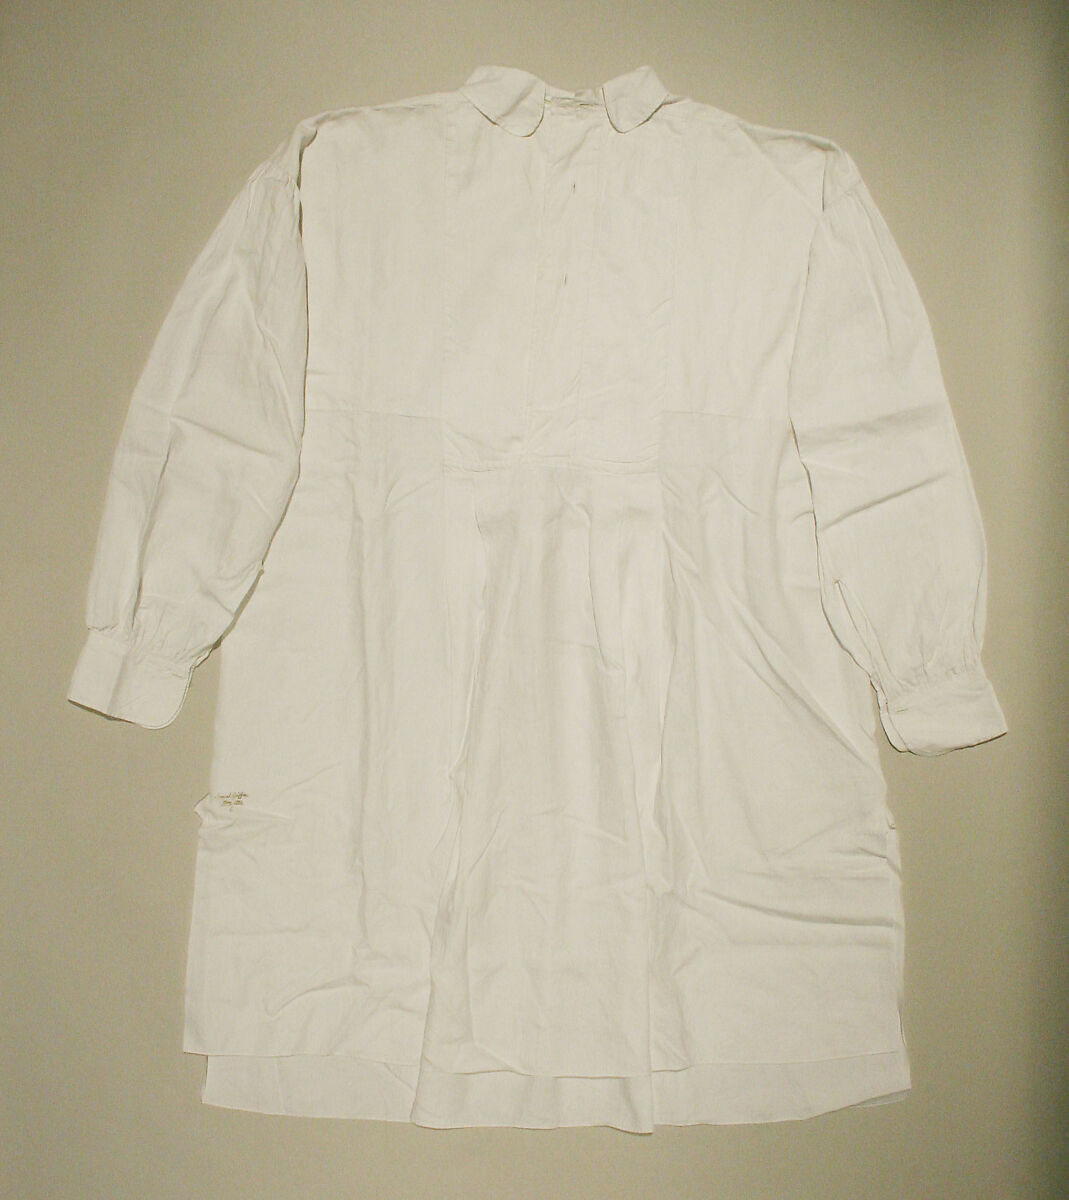 Shirt, cotton, American or European 